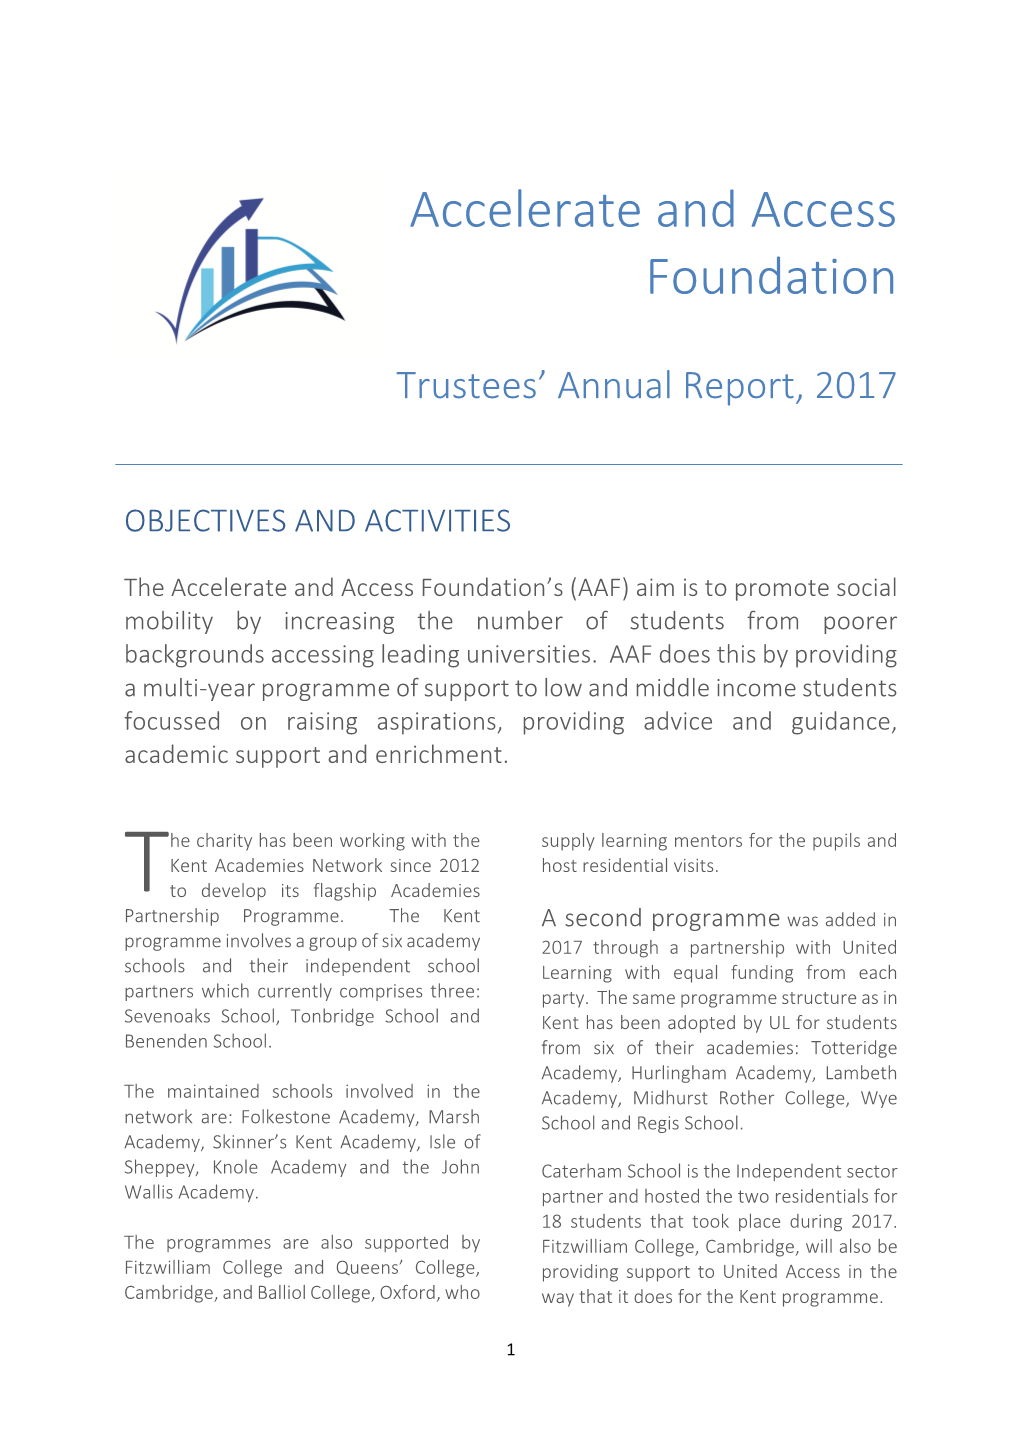 AAF 2017 Annual Report